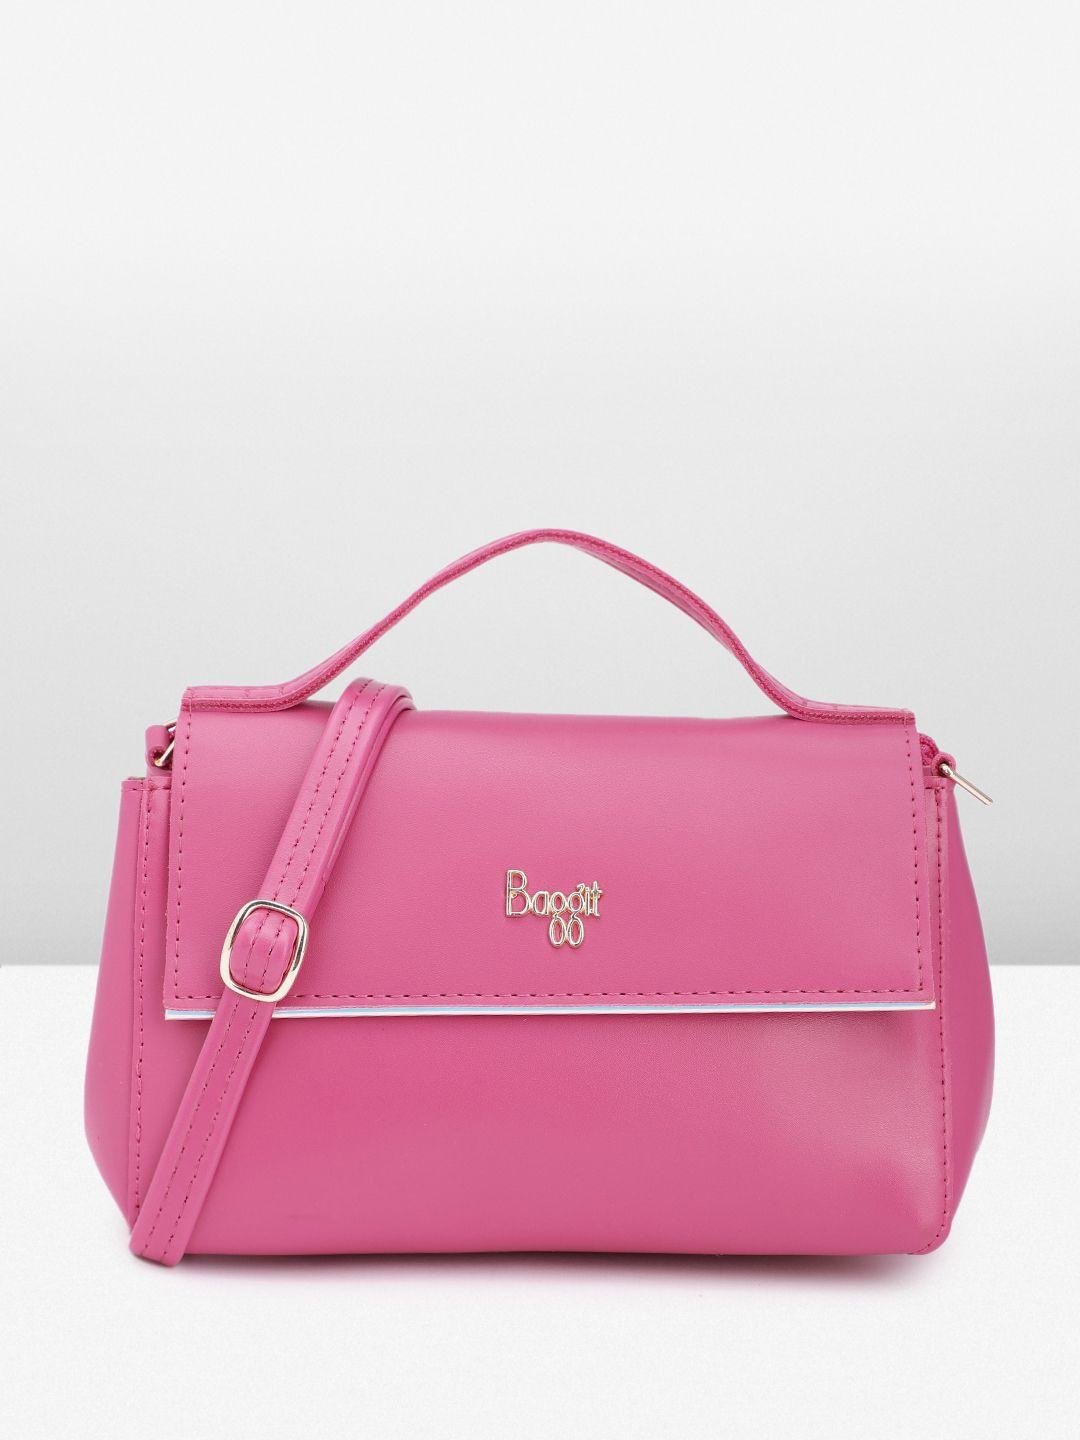 baggit structured satchel